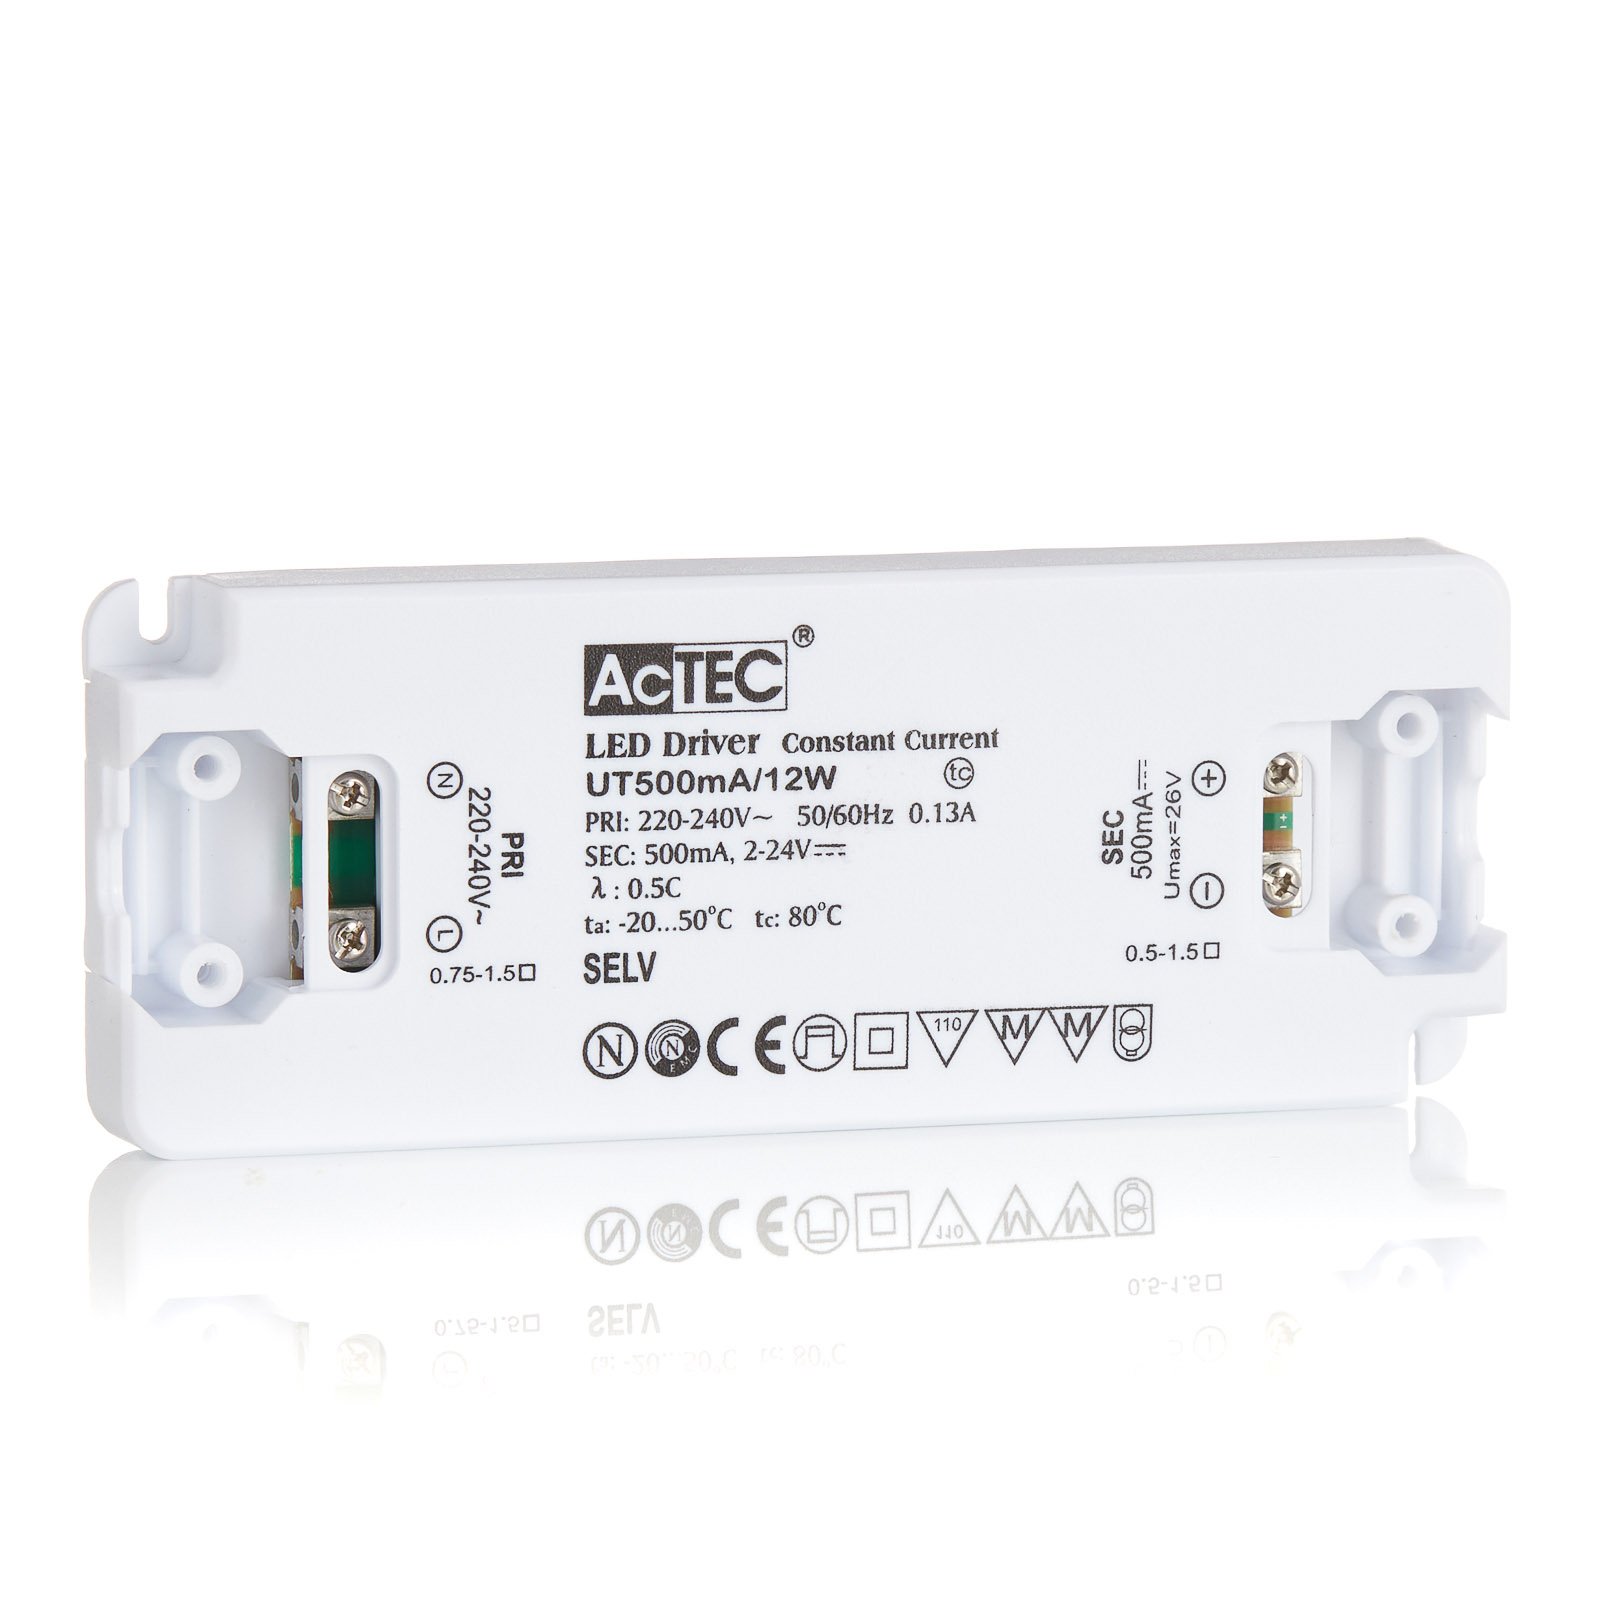 AcTEC Slim transformador LED CC 500mA, 12W